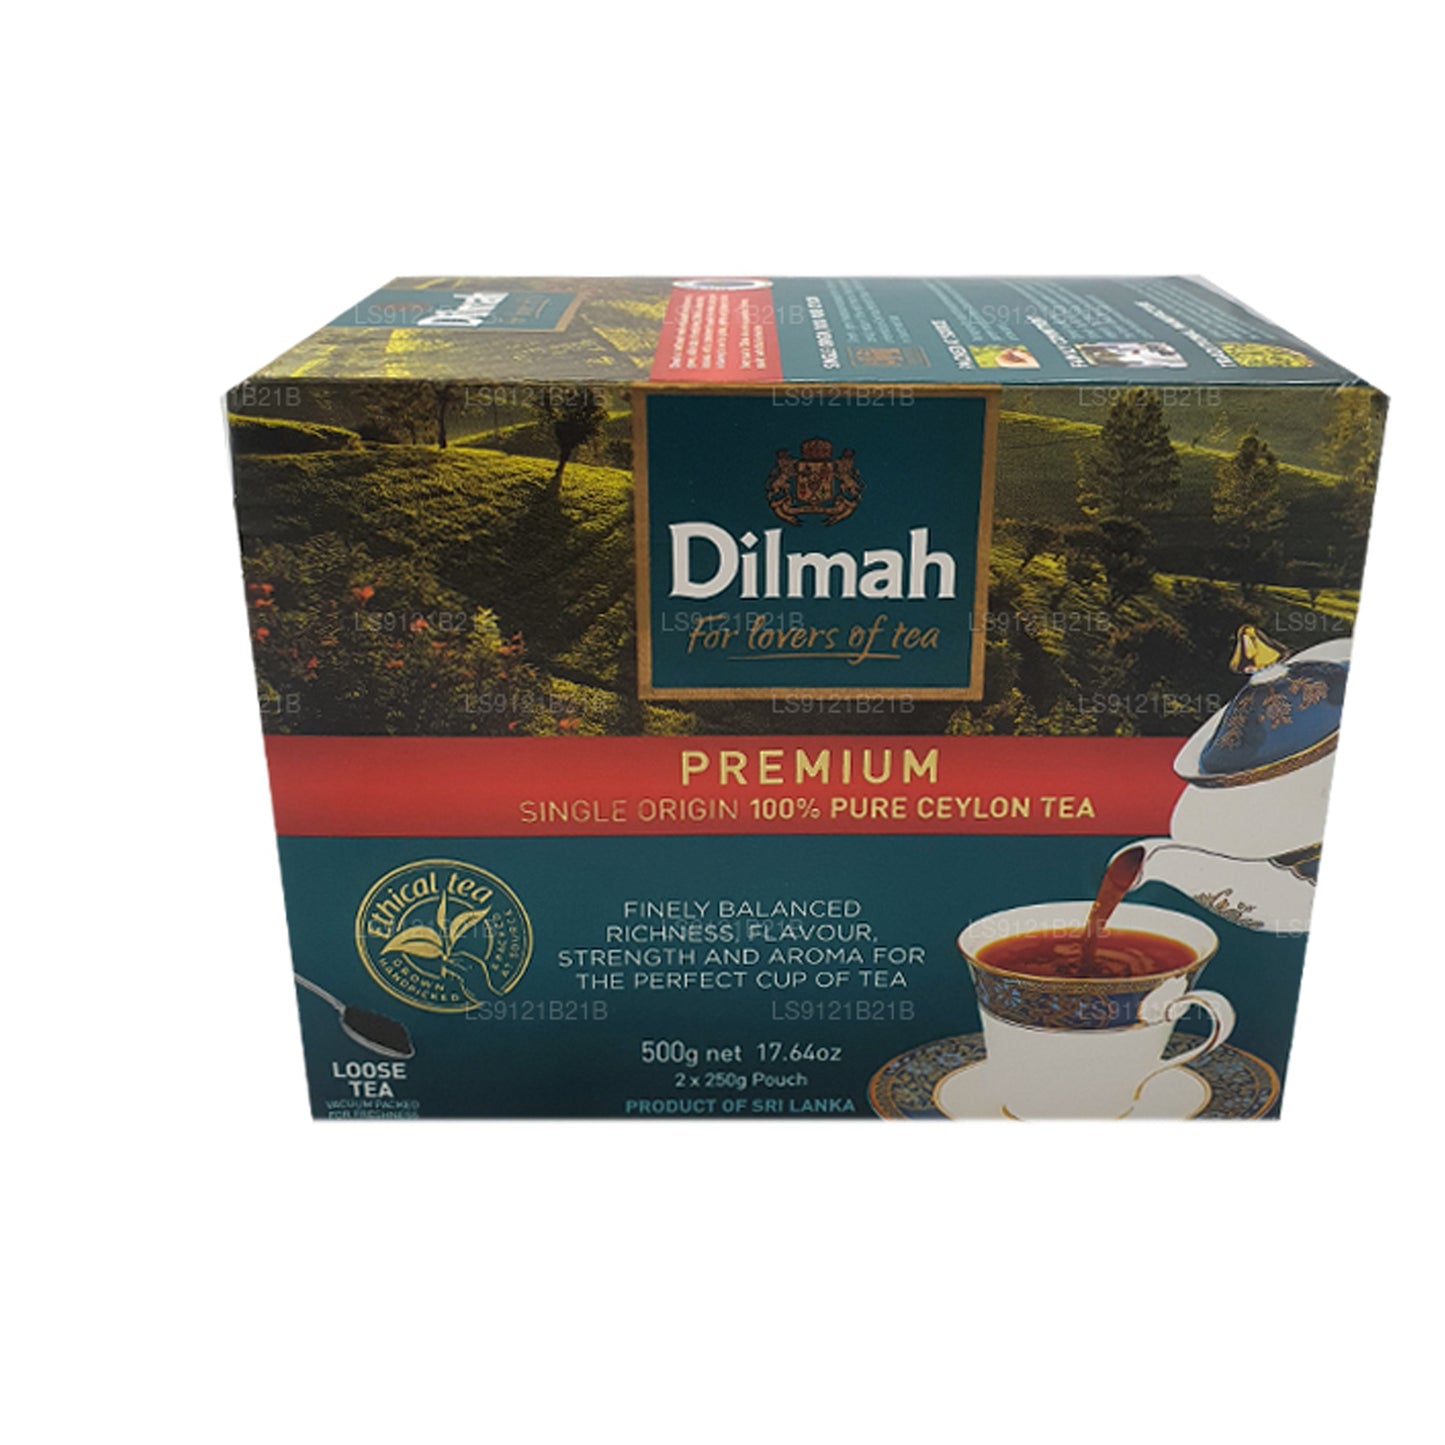 Dilmah Premium Ceylon lösa blad te (125g)